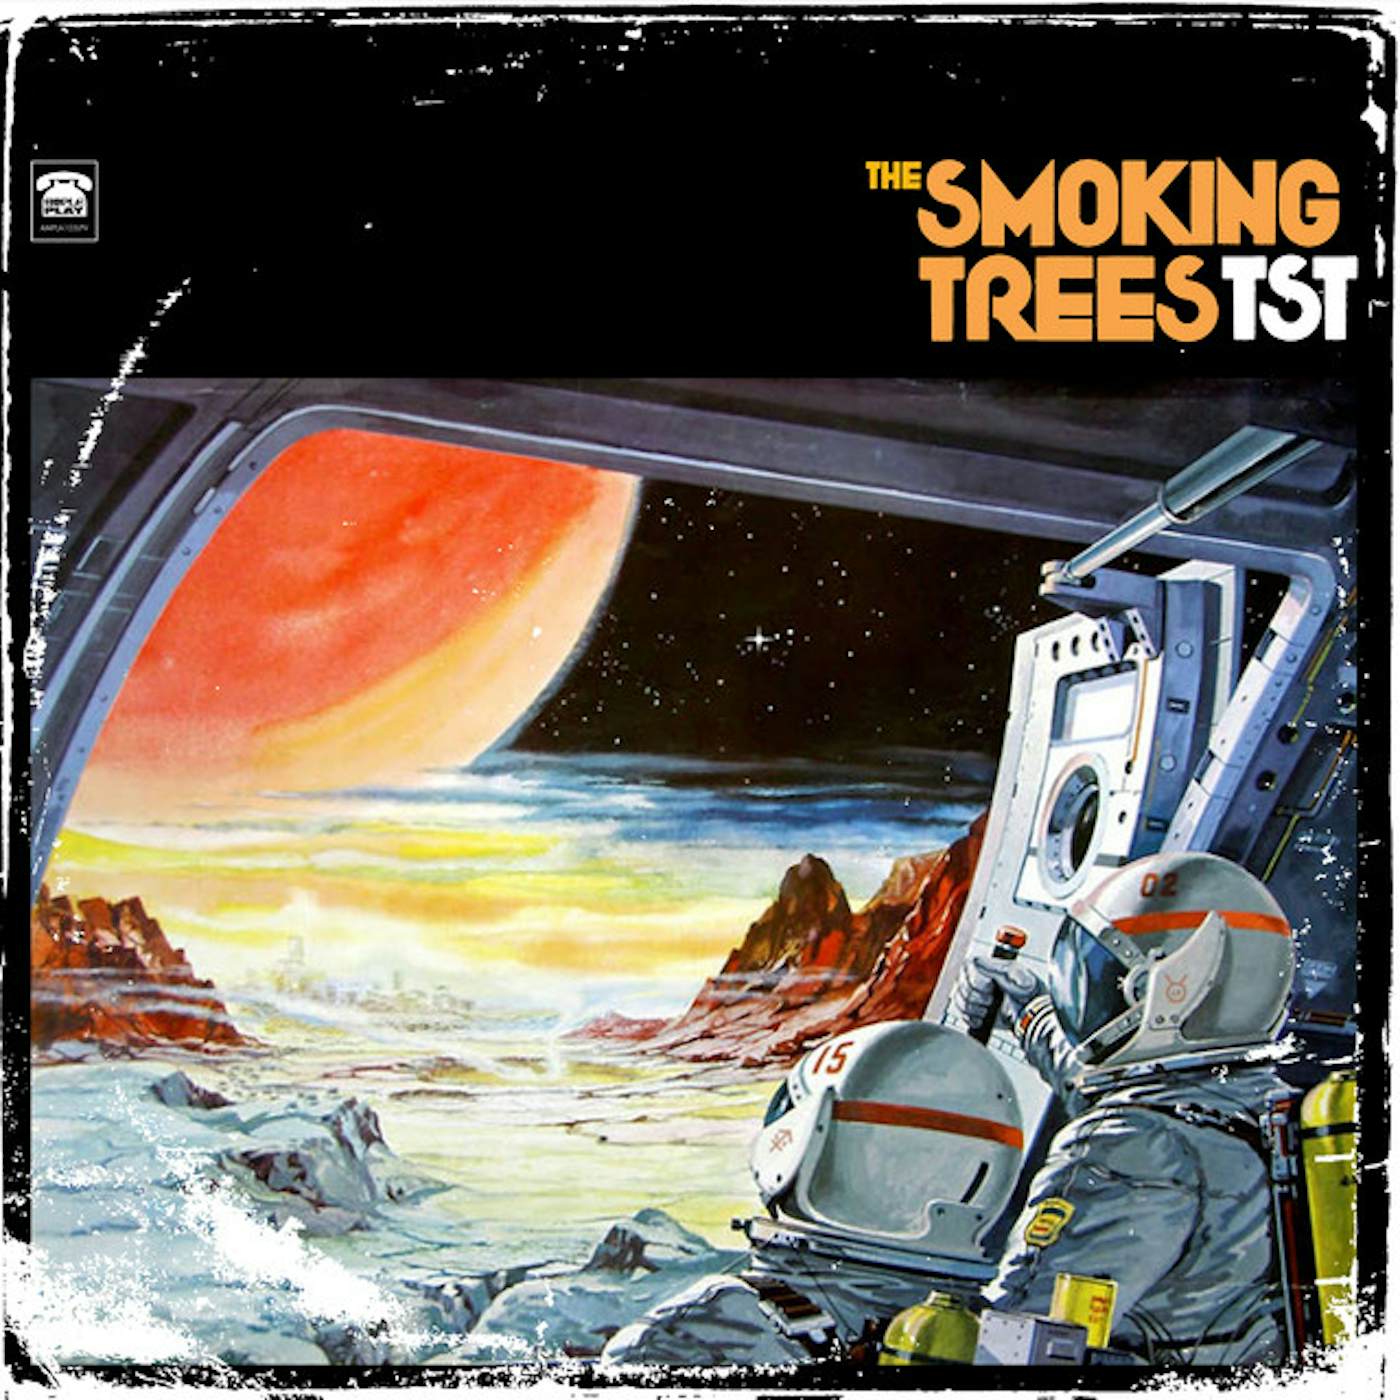 The Smoking Trees TST Vinyl Record